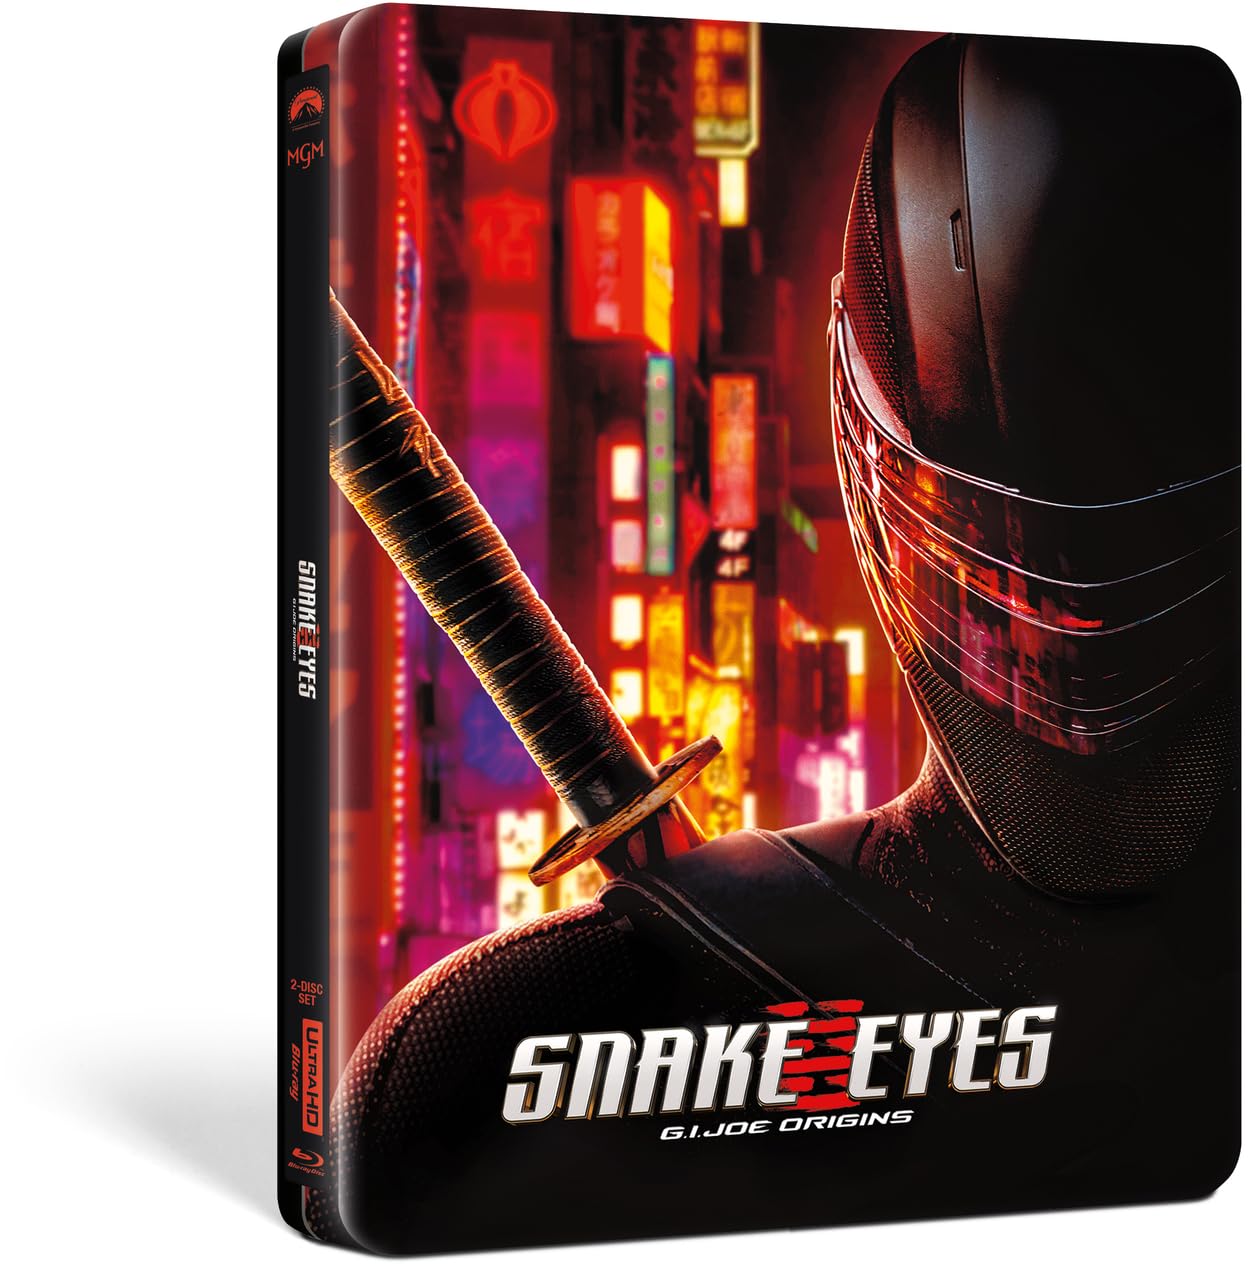 G.I. Joe Origins: Snake Eyes DAMAGED Steelbook